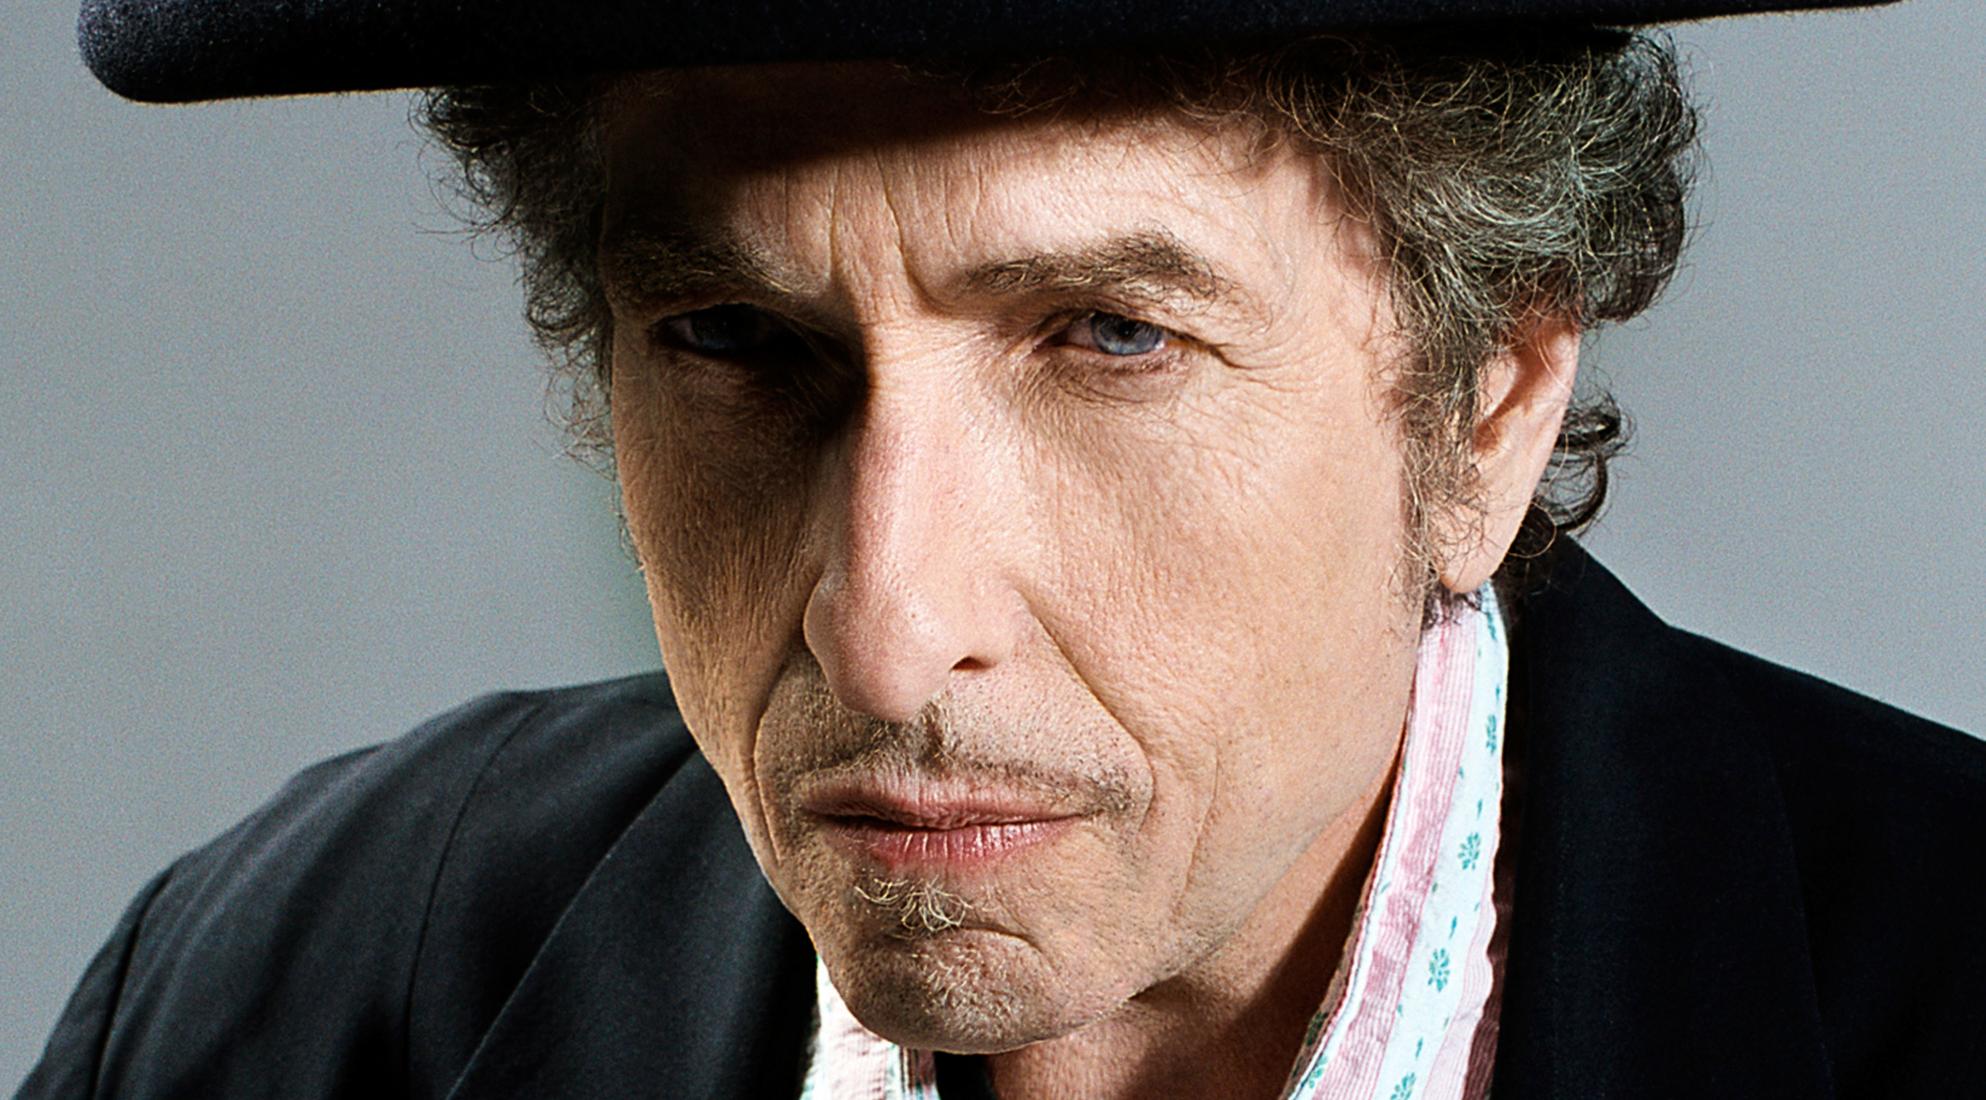 Bob Dylan Biography; Net Worth, Age, Children, Songs ...